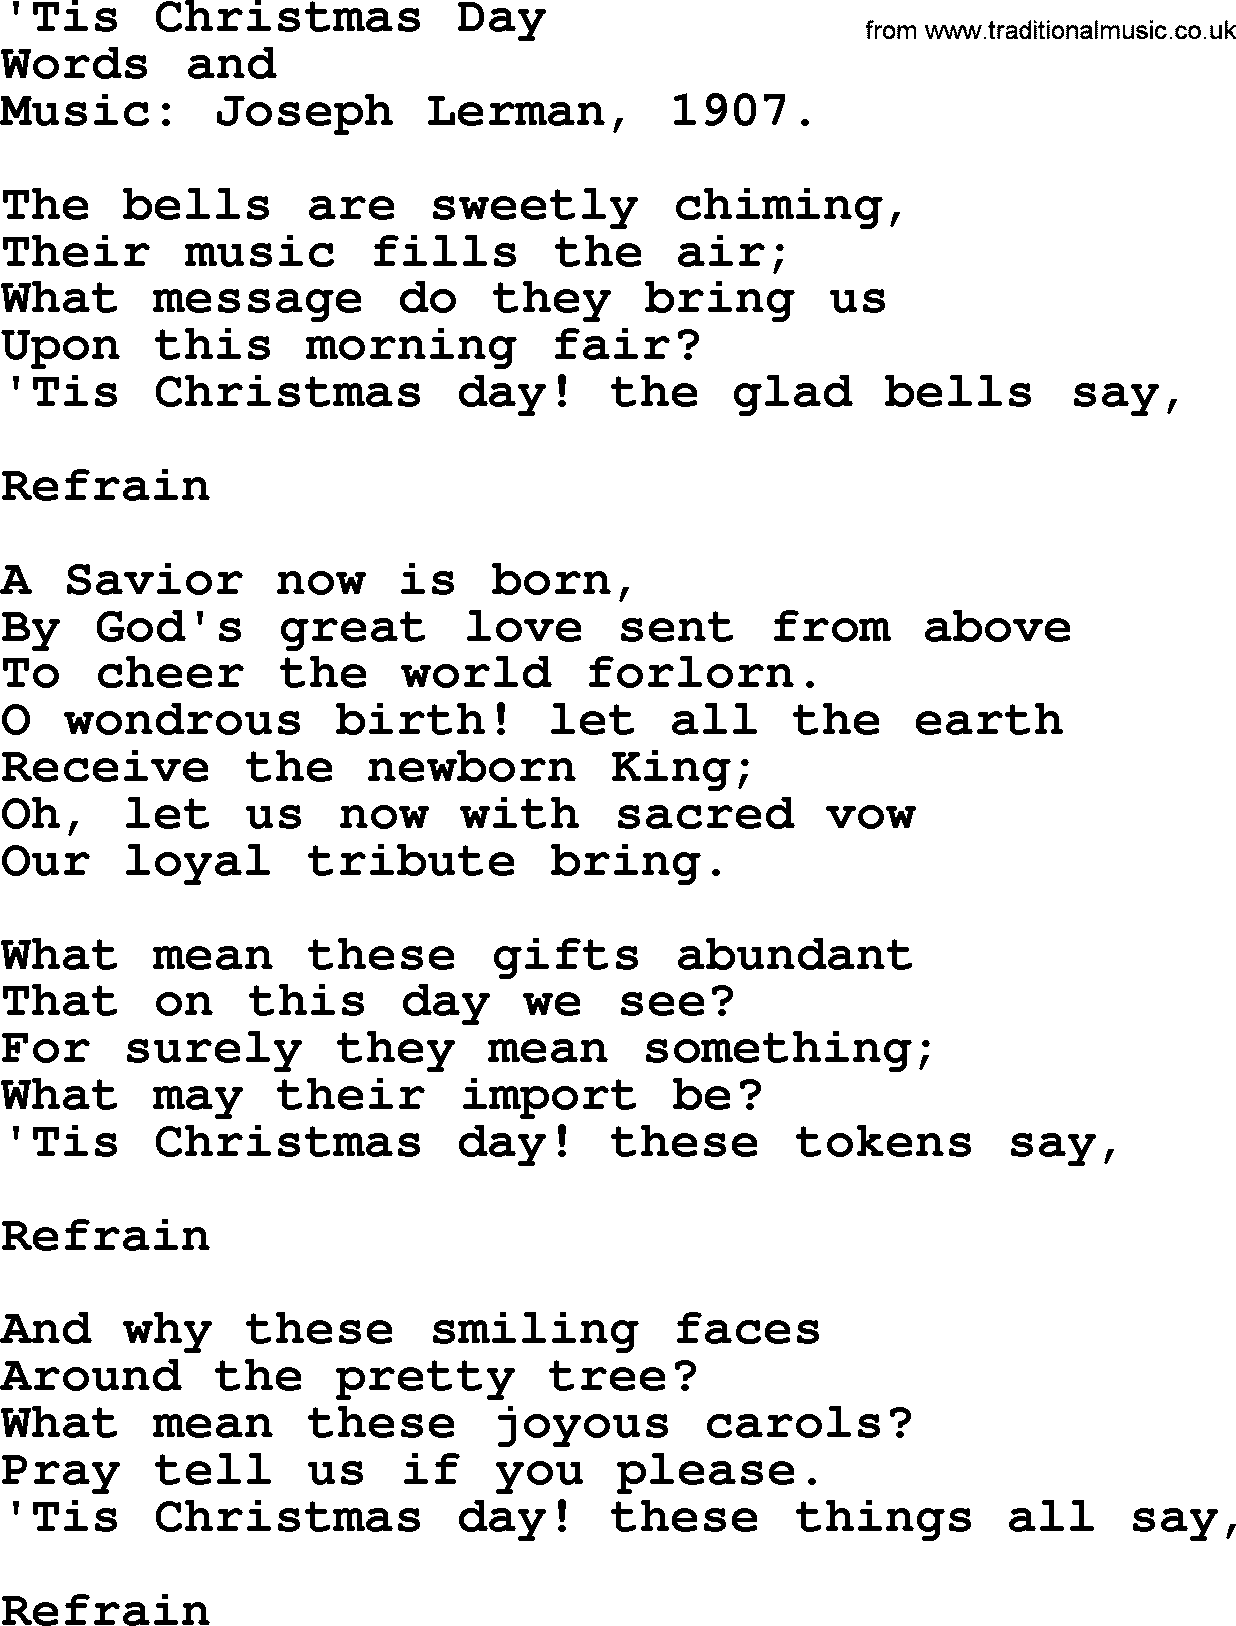 Christmas Hymns, Carols and Songs, title: 'tis Christmas Day, lyrics with PDF